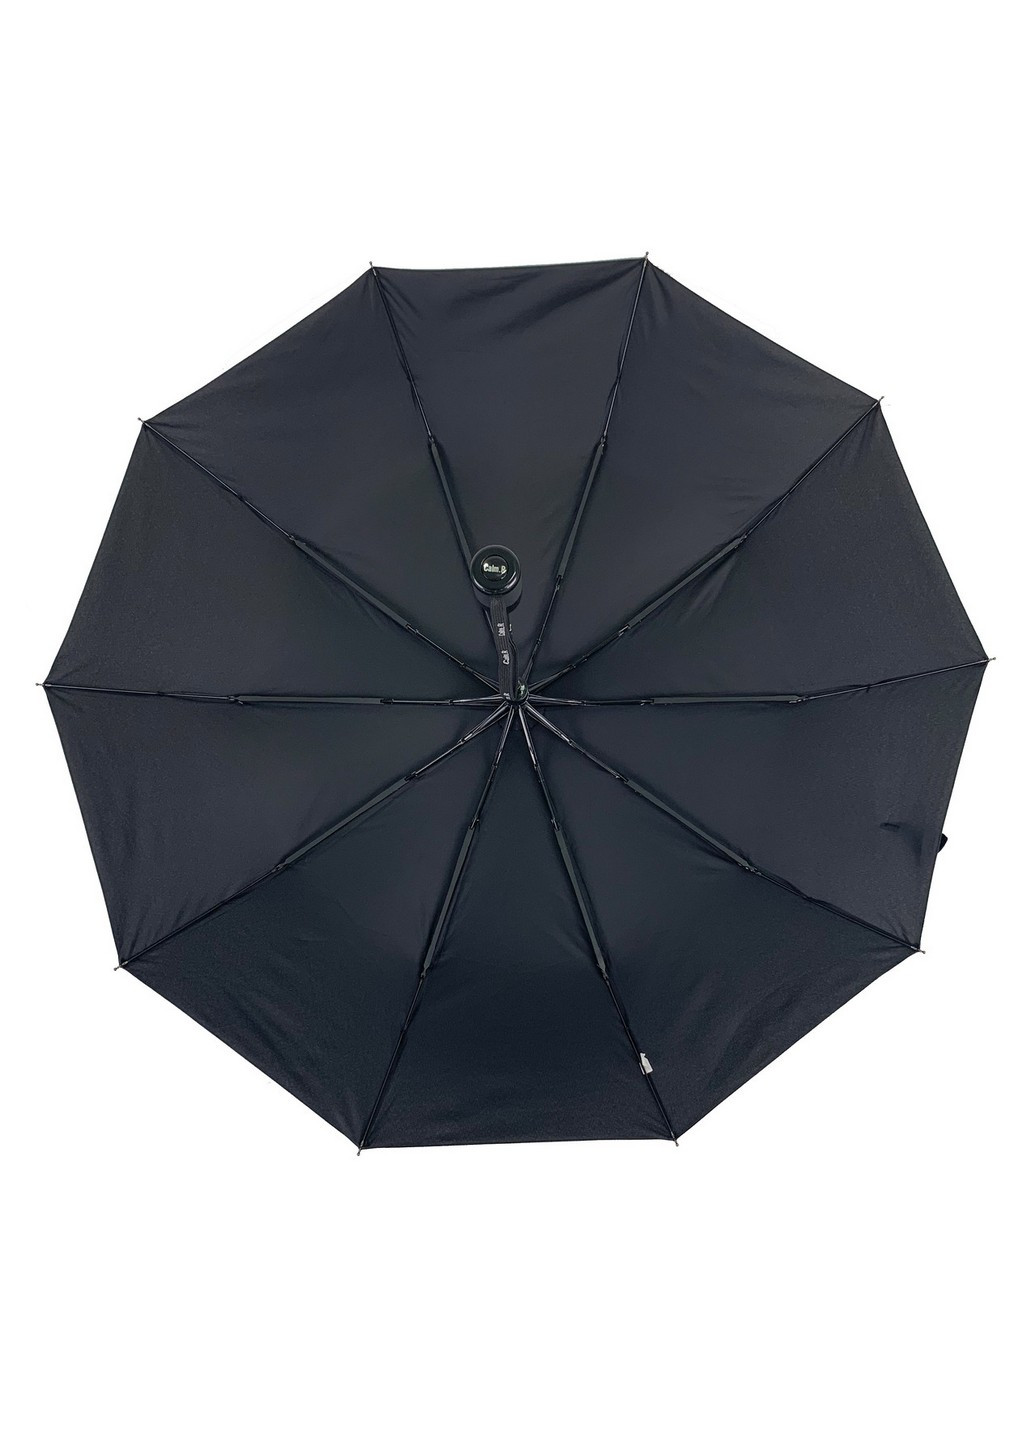 Мужской зонт полуавтомат 100 см Calm Rain (259213046)